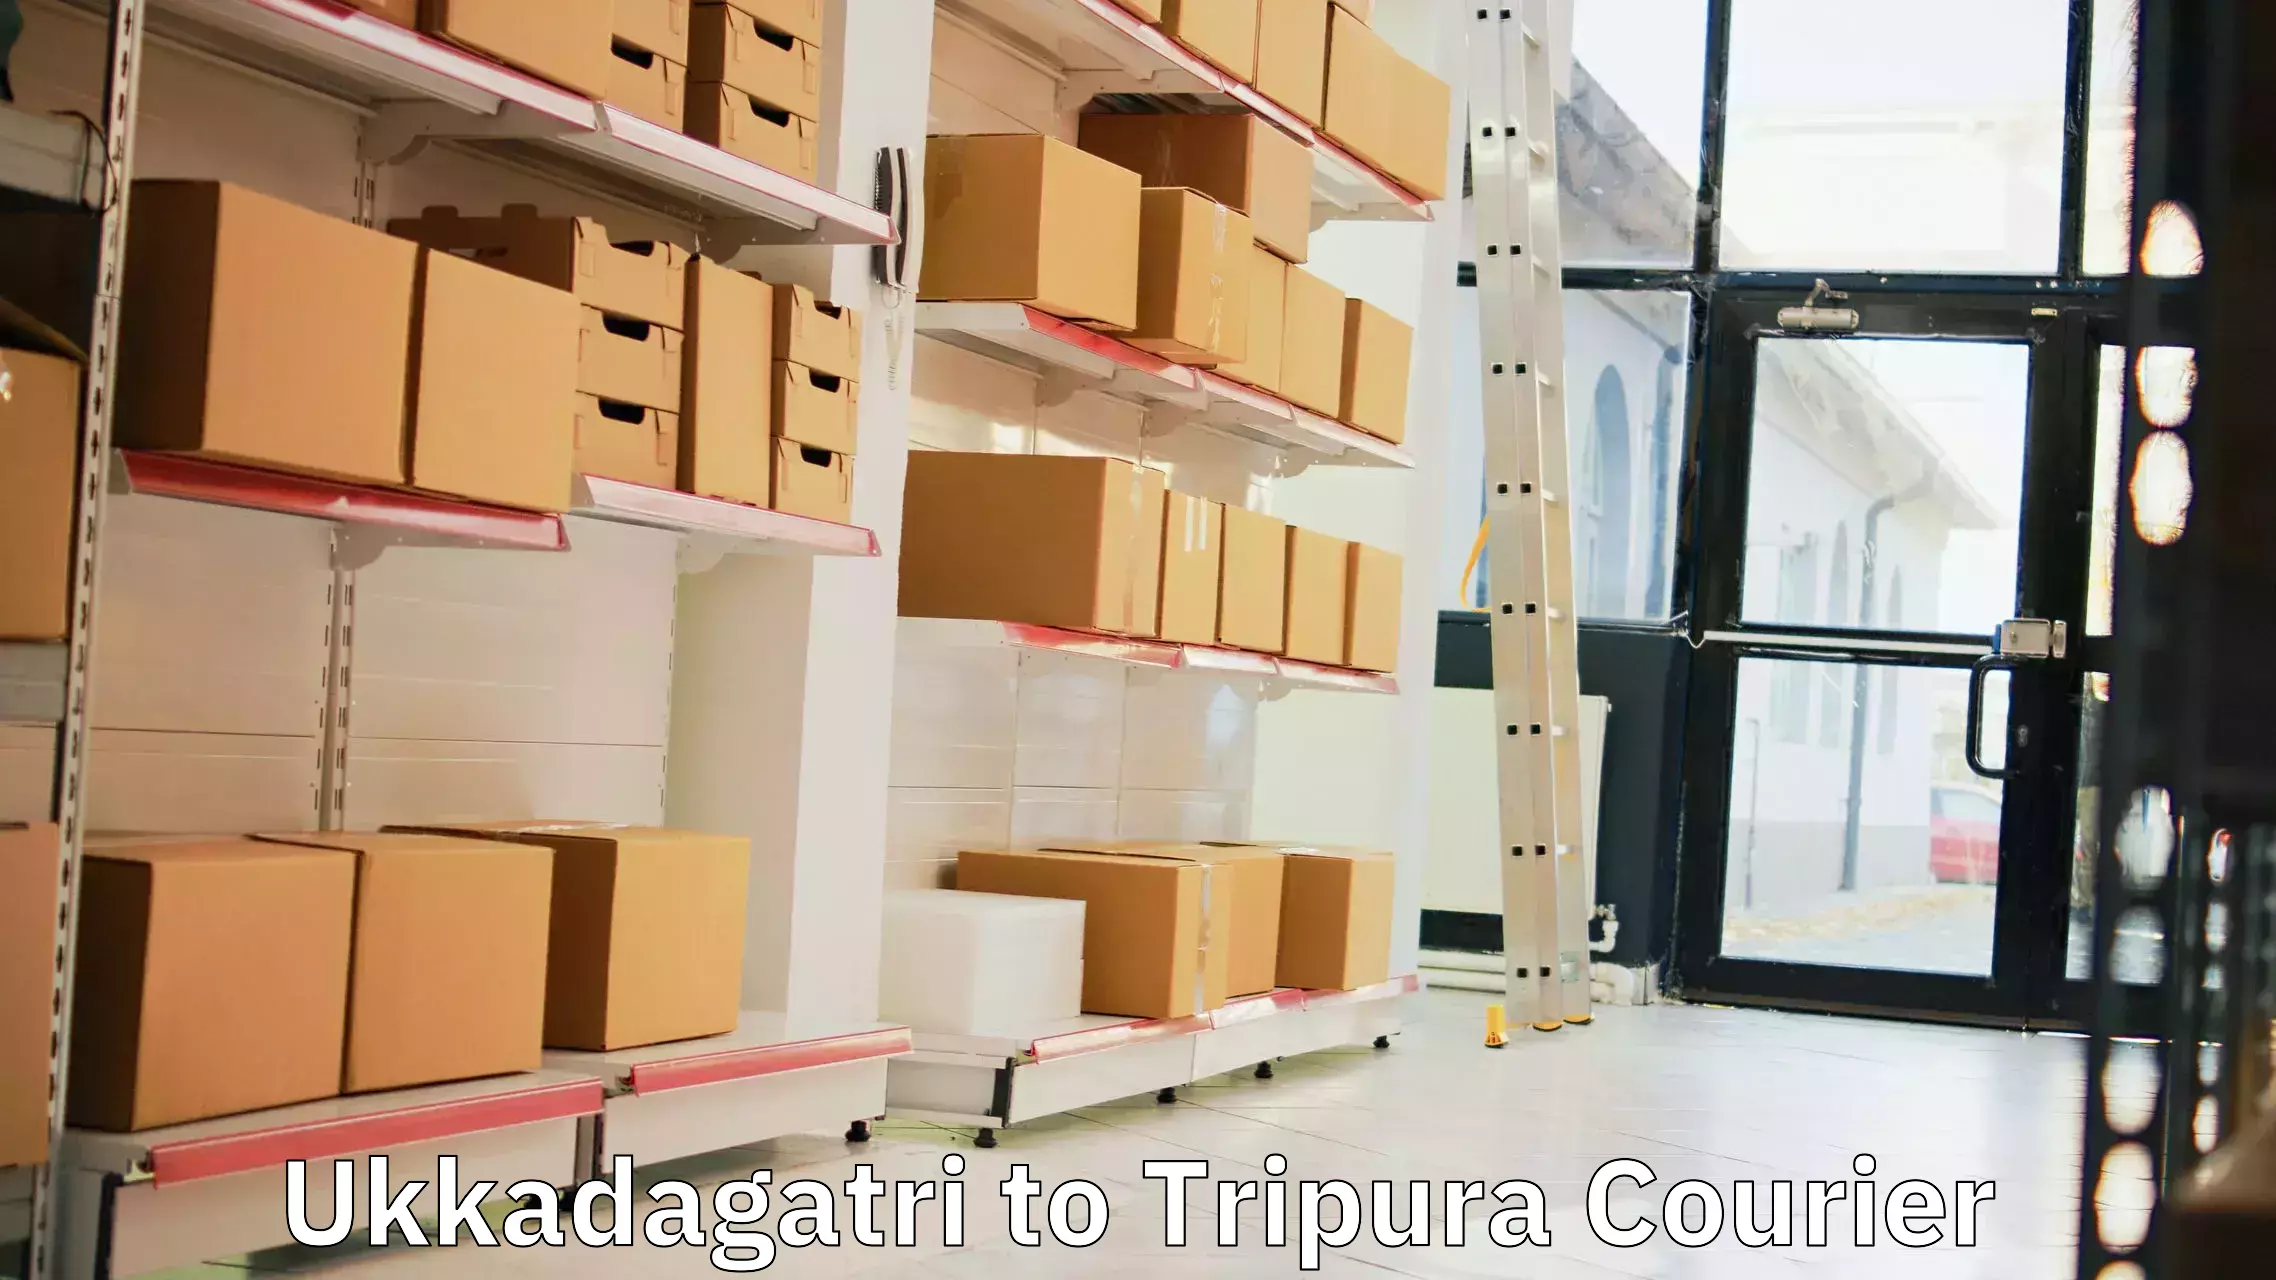 Small business couriers Ukkadagatri to Tripura